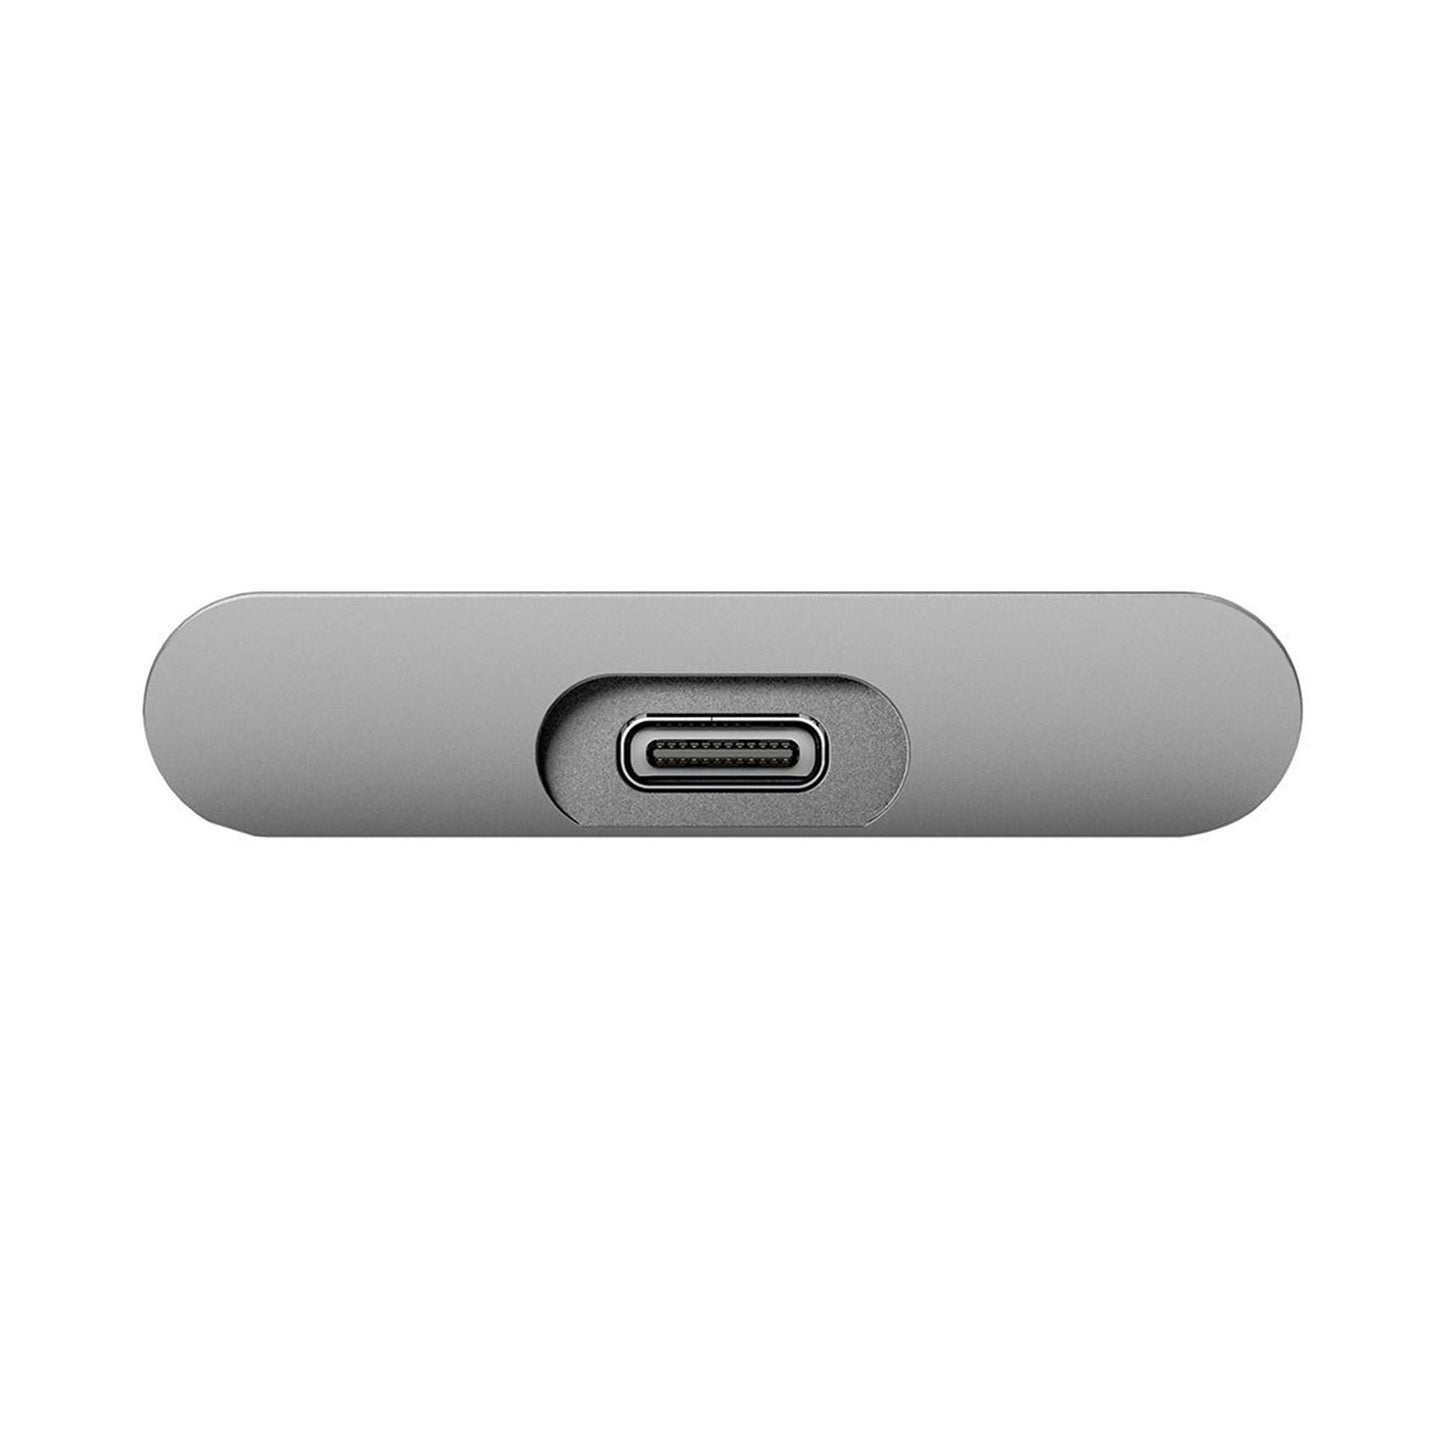 LACIE Rugged USB 3.1 Type C 1TB - Silver